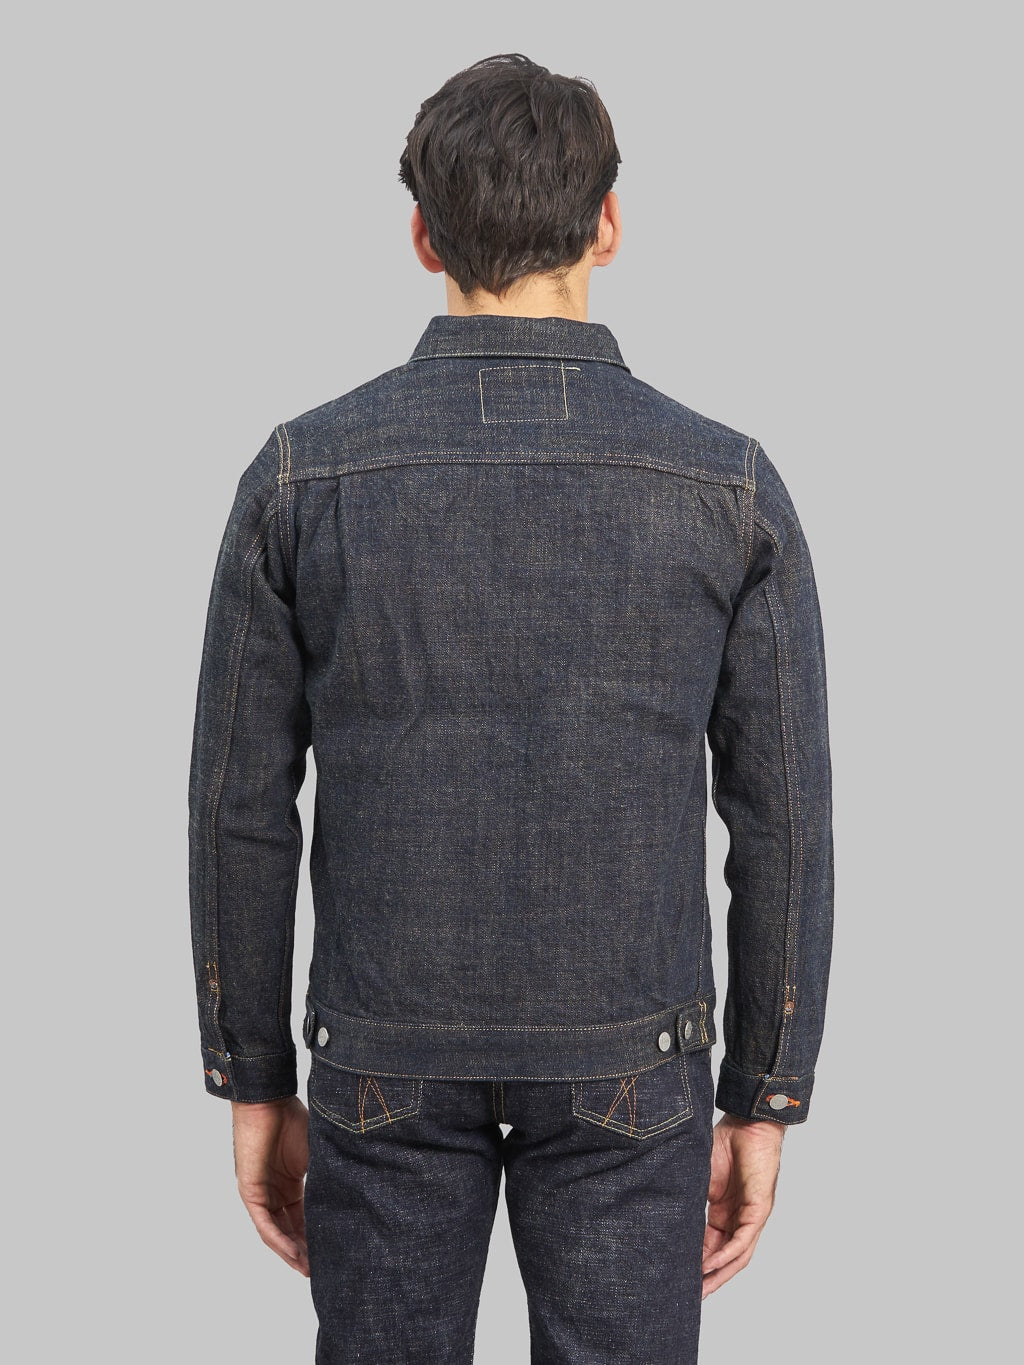 Tanuki soga selvedge denim type II jacket back fit